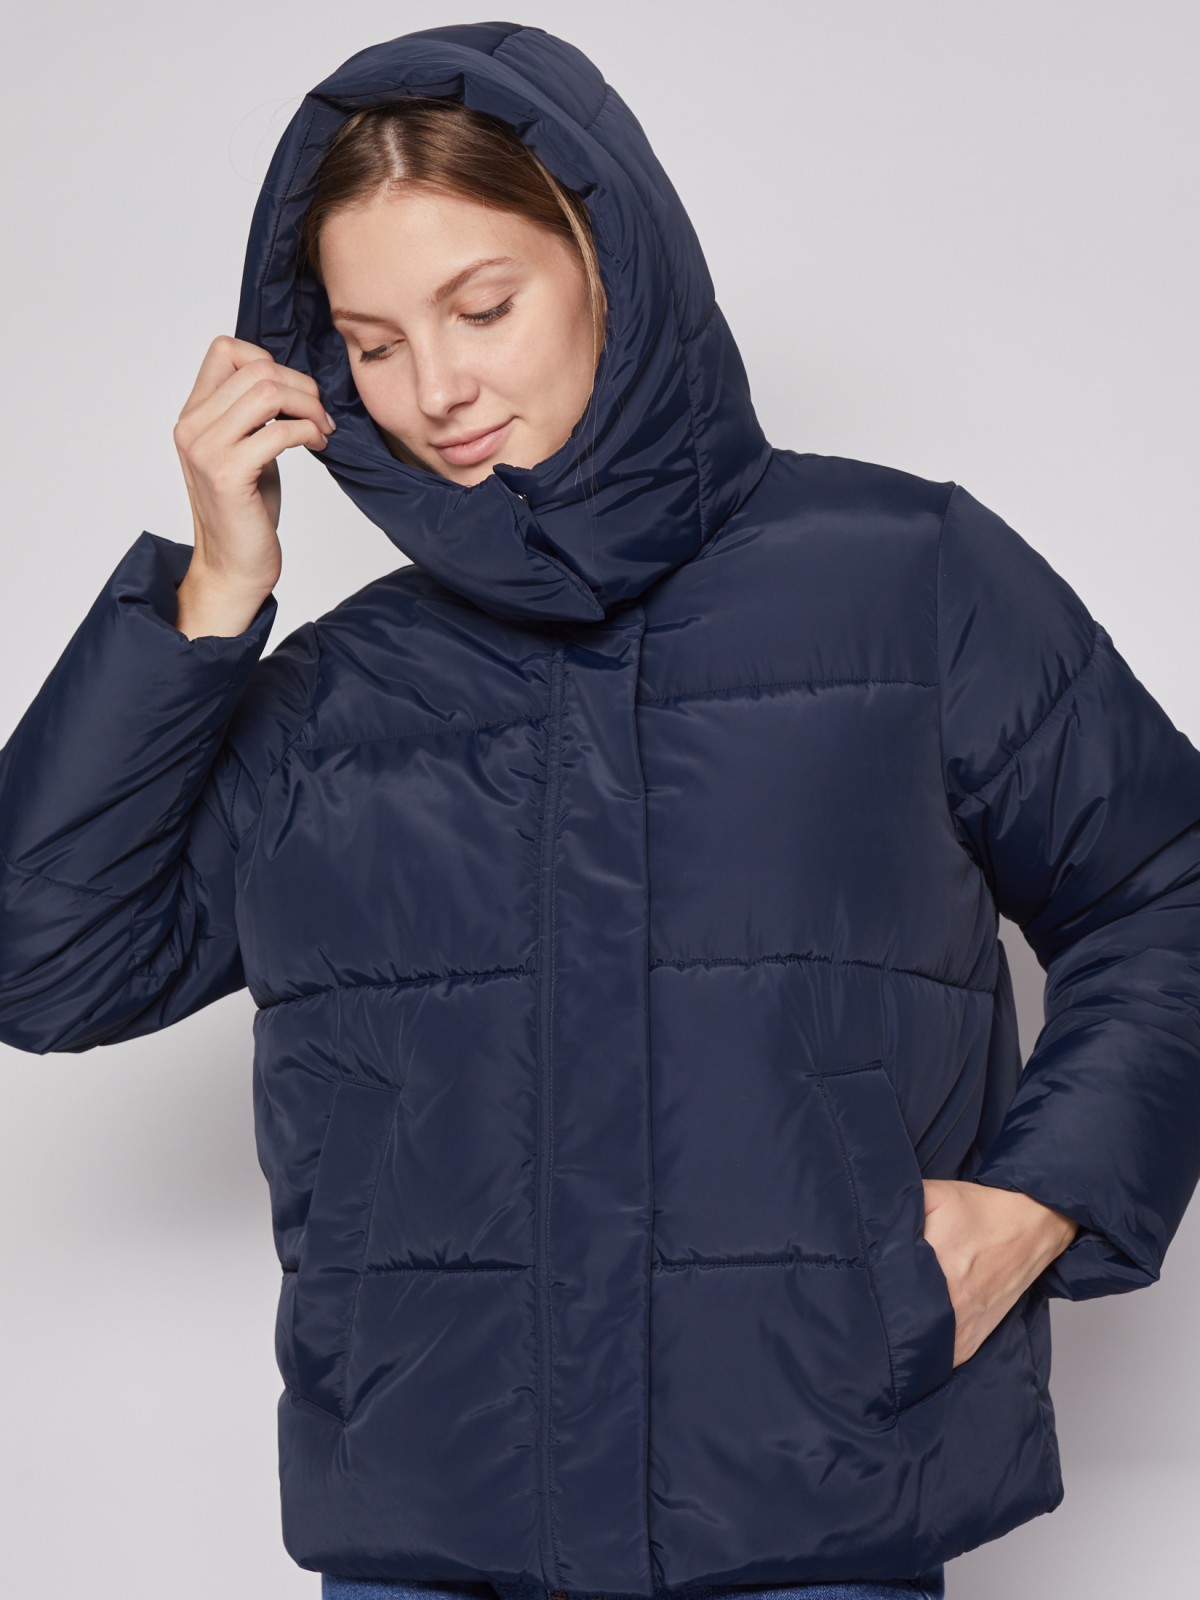 Утеплённая дутая куртка zolla 022125112134, цвет синий, размер XS - фото 6